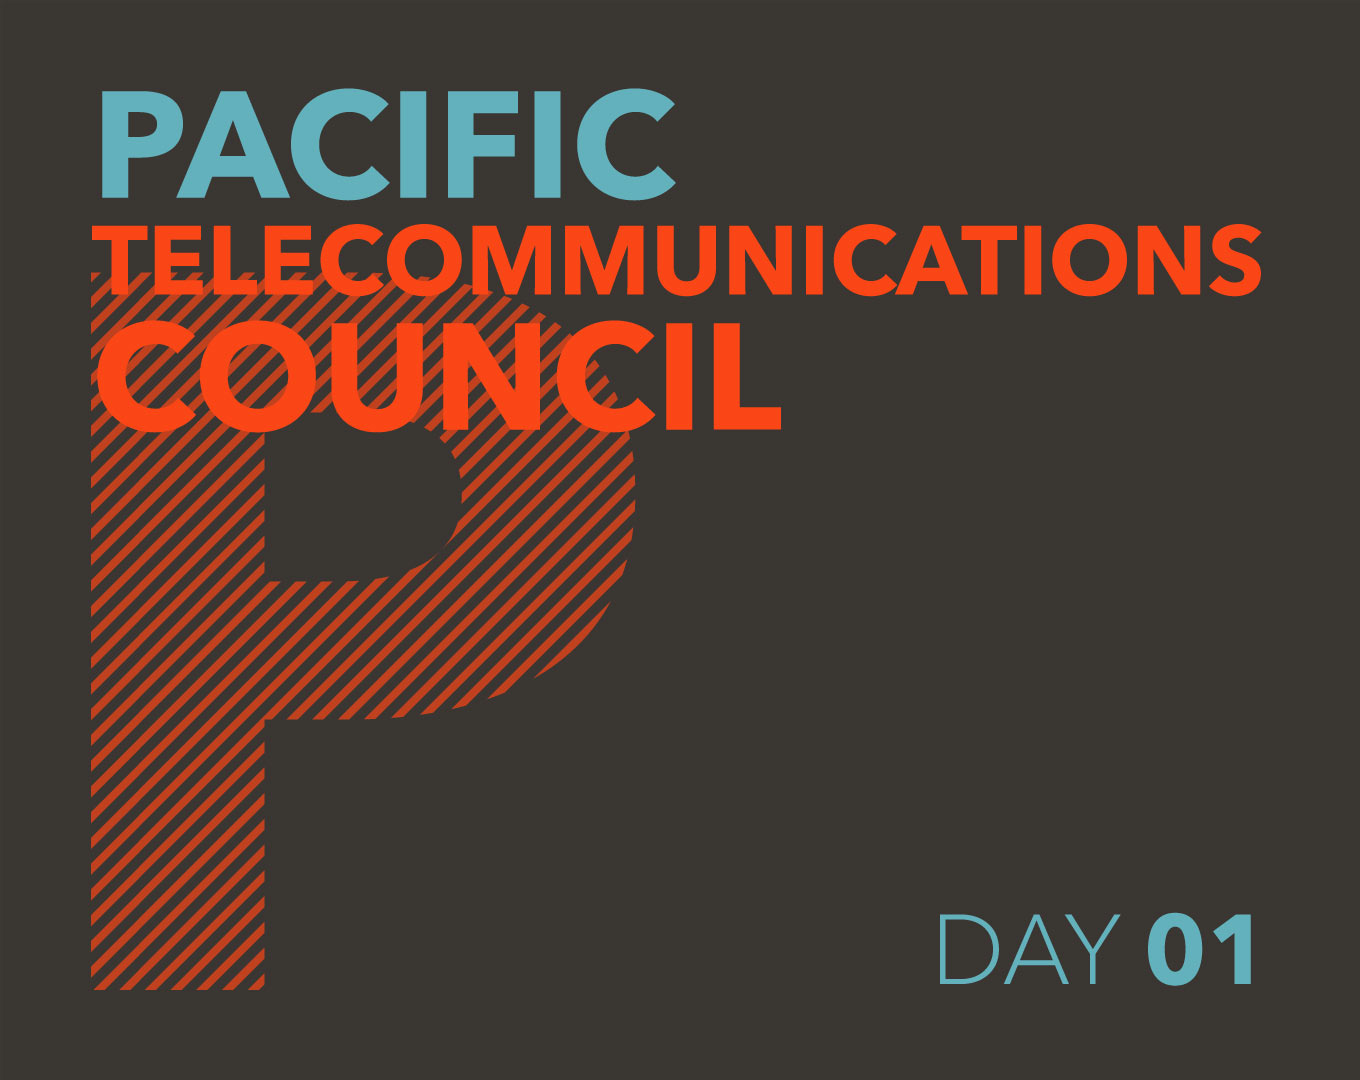 Pacific Telecommunications Council